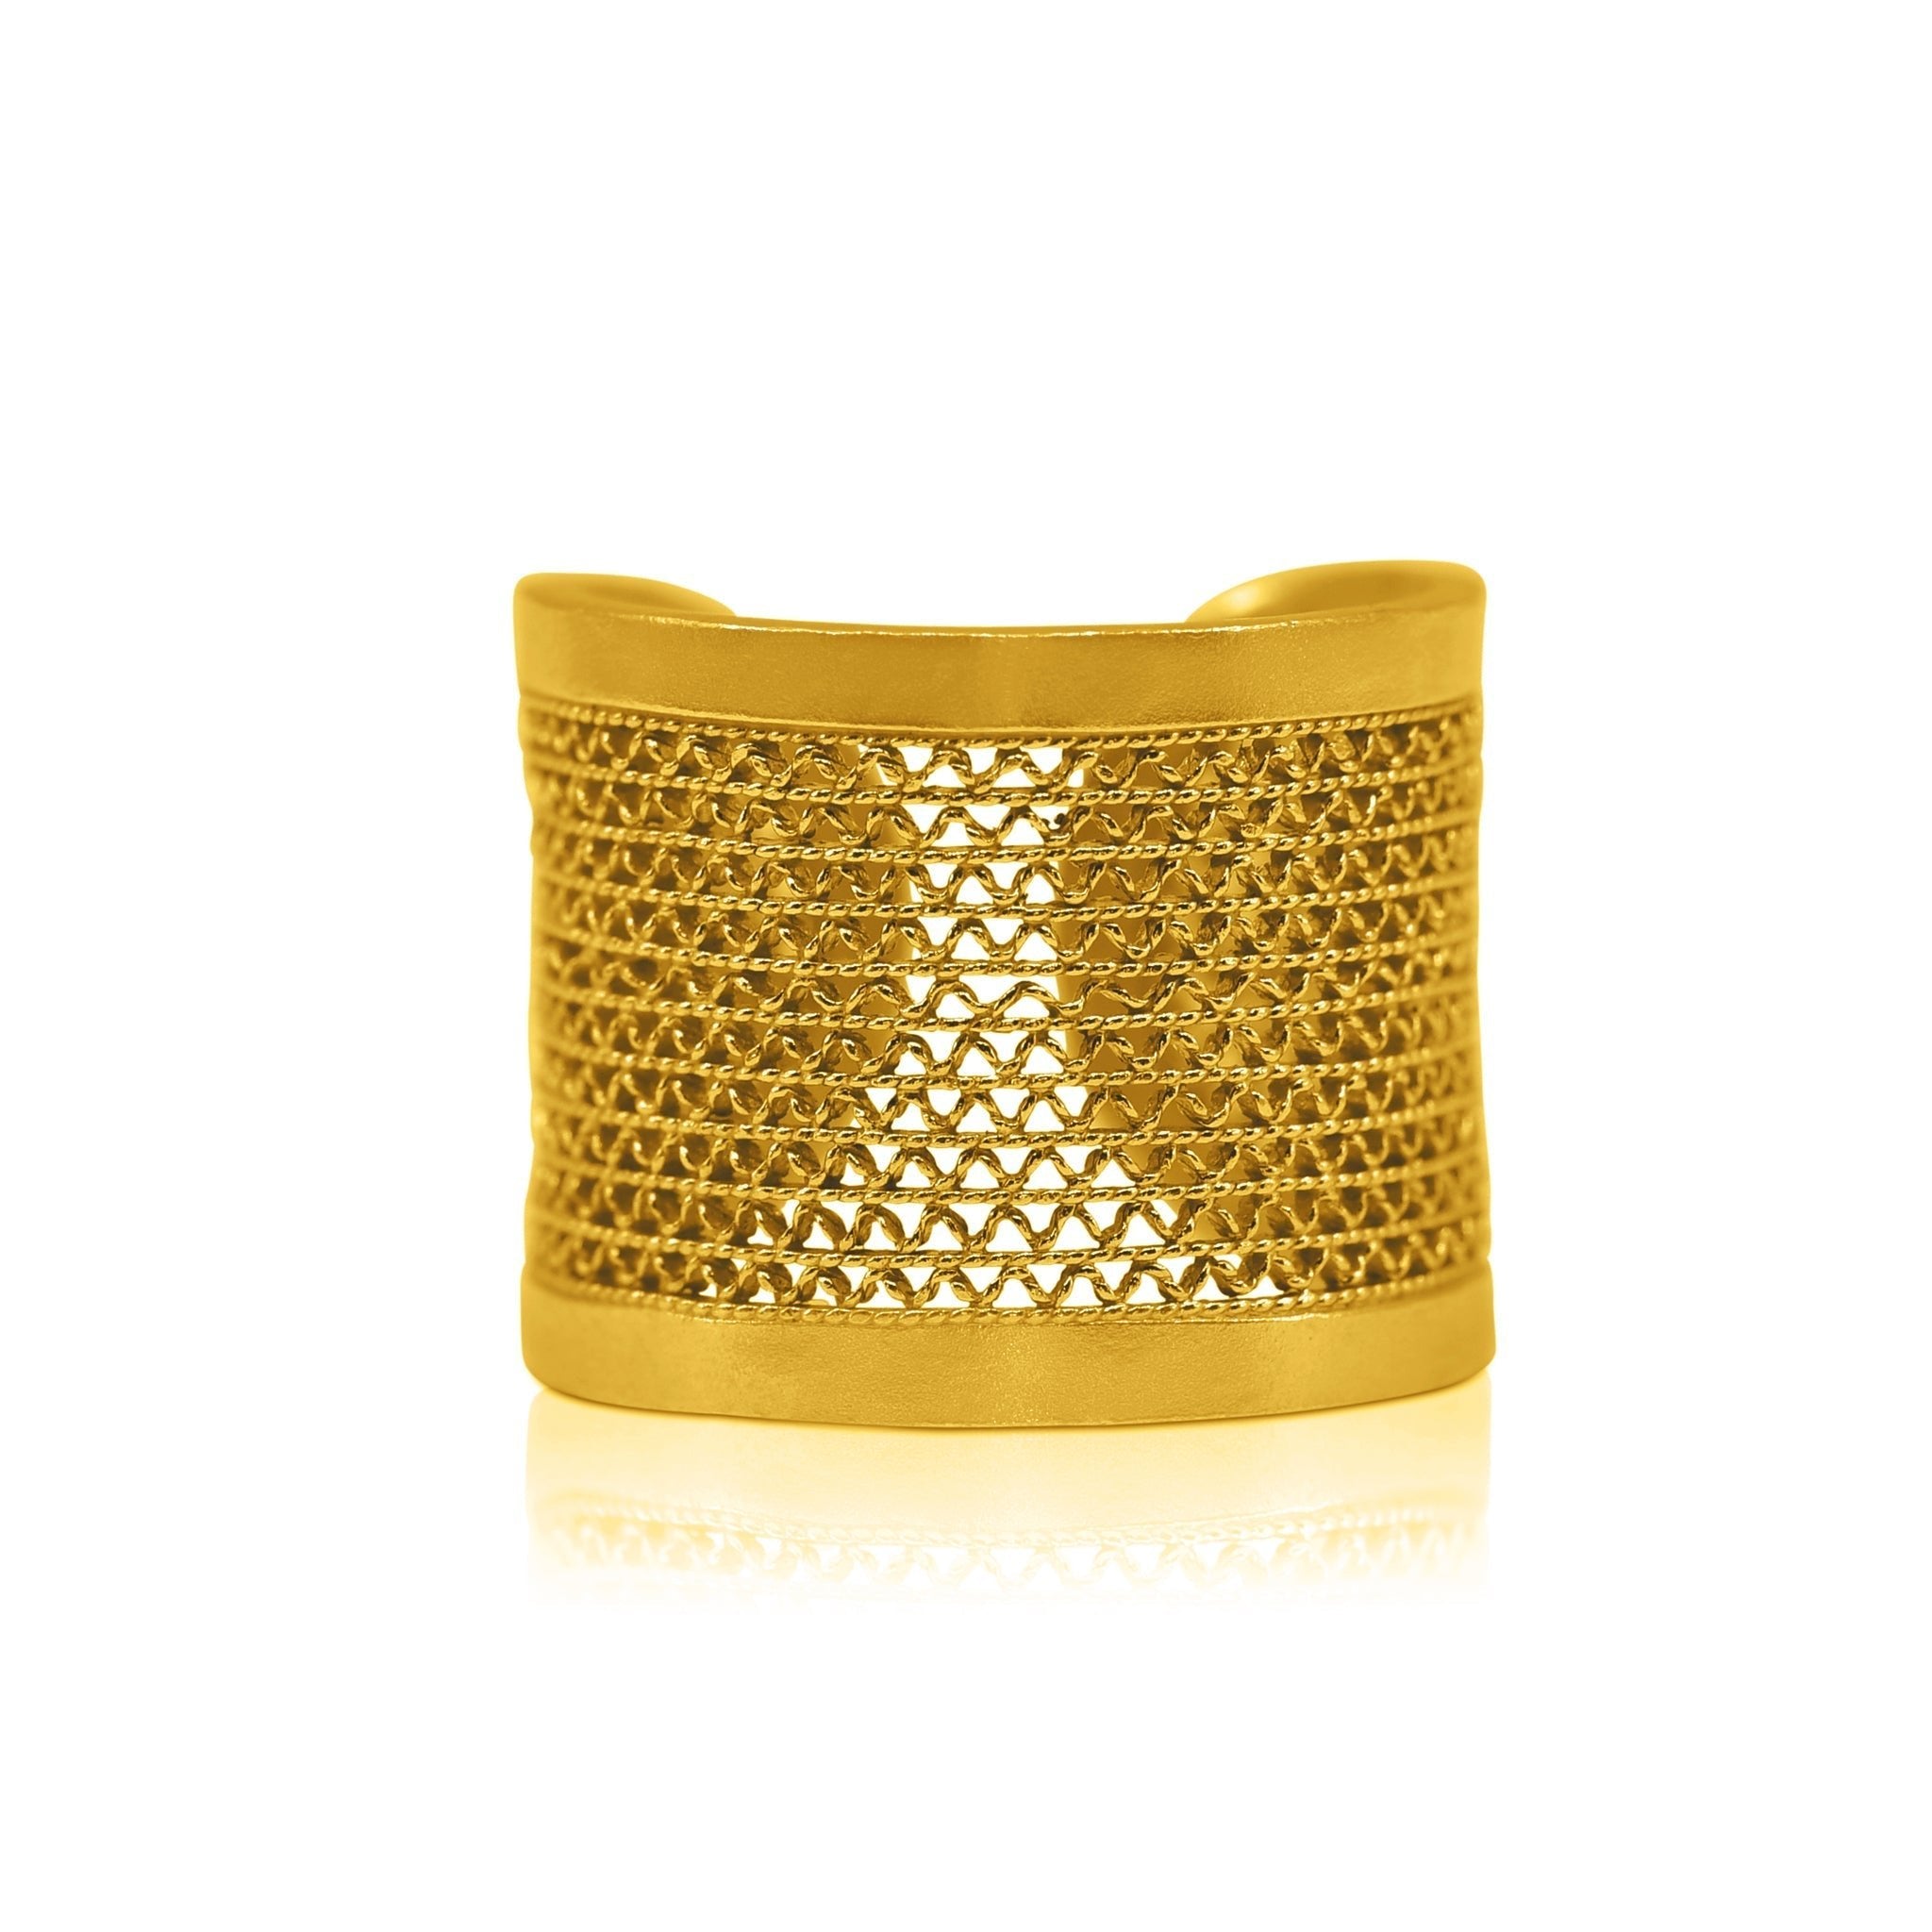 Kellie 18k Gold Vermeil Plated Filigree Ring - Size 6 - Rings